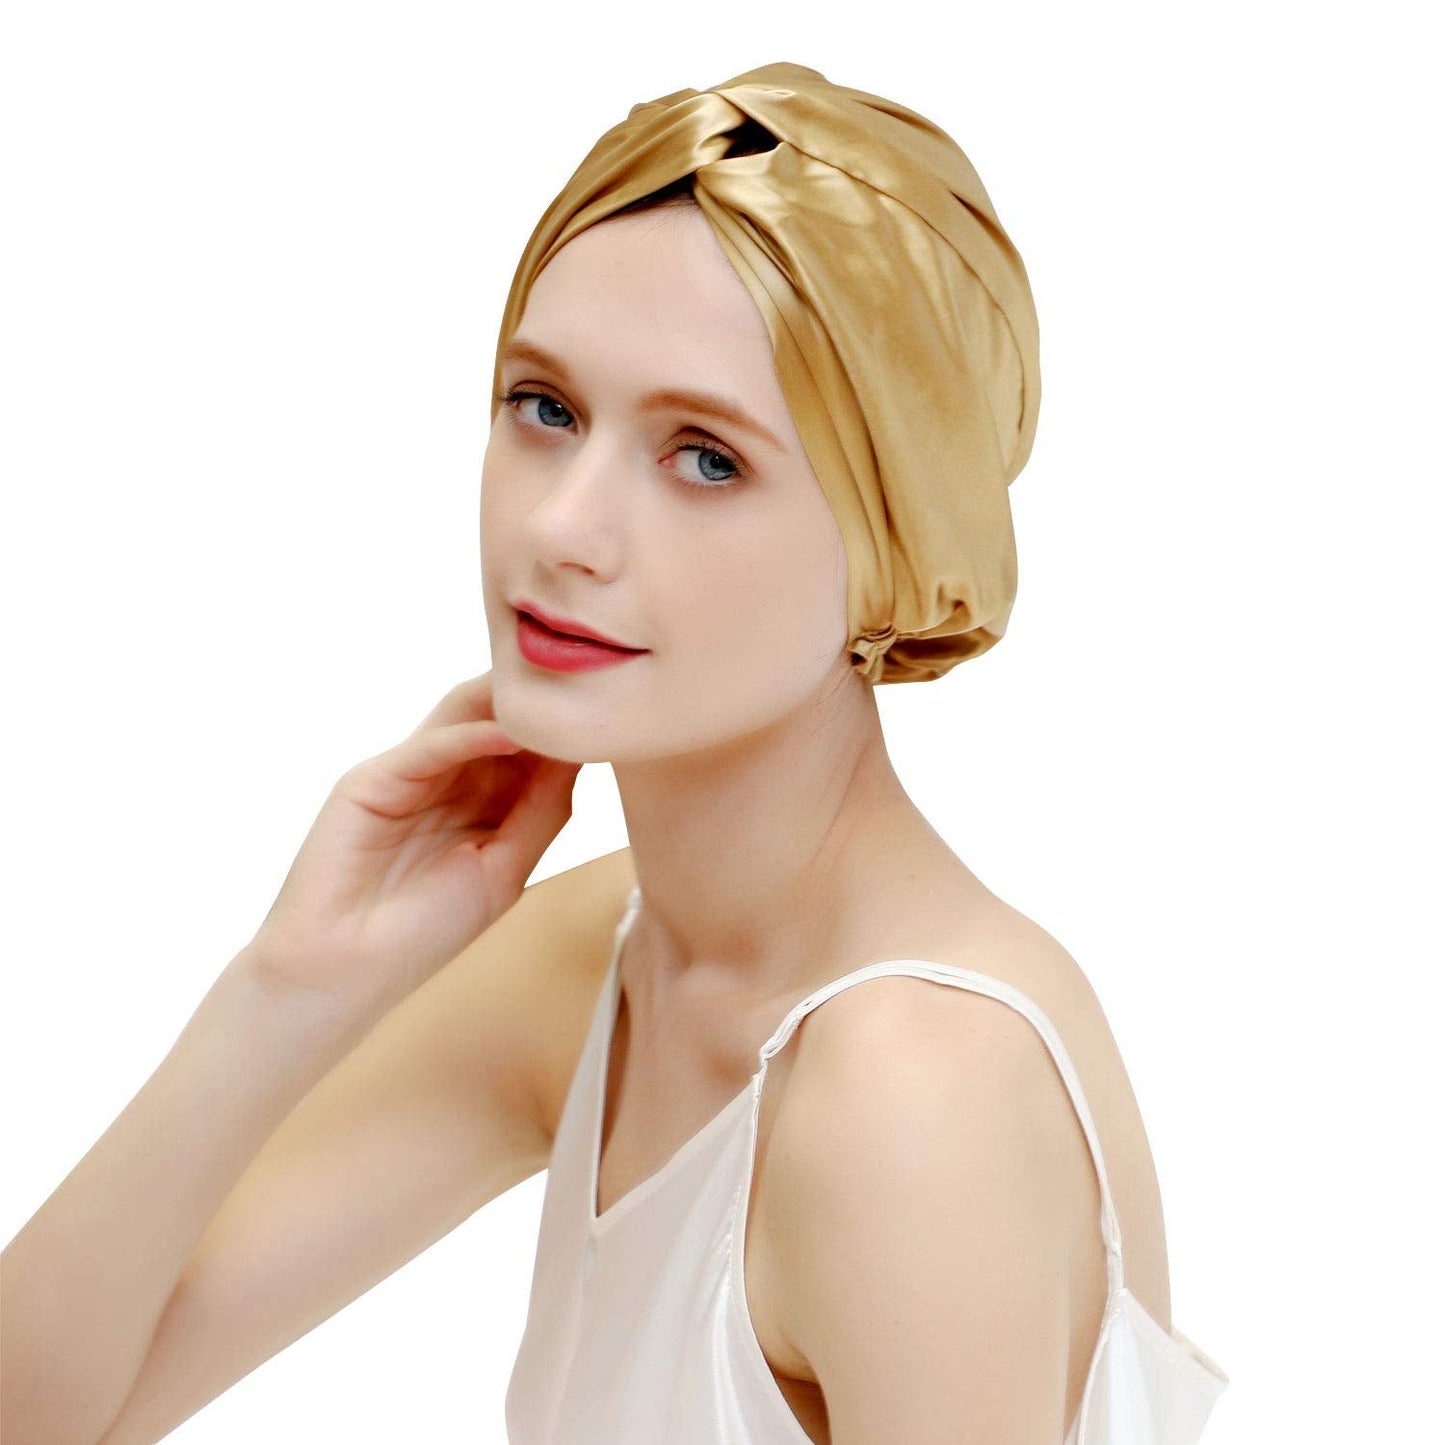 Silk Bonnet for Sleeping & Women Hair Care